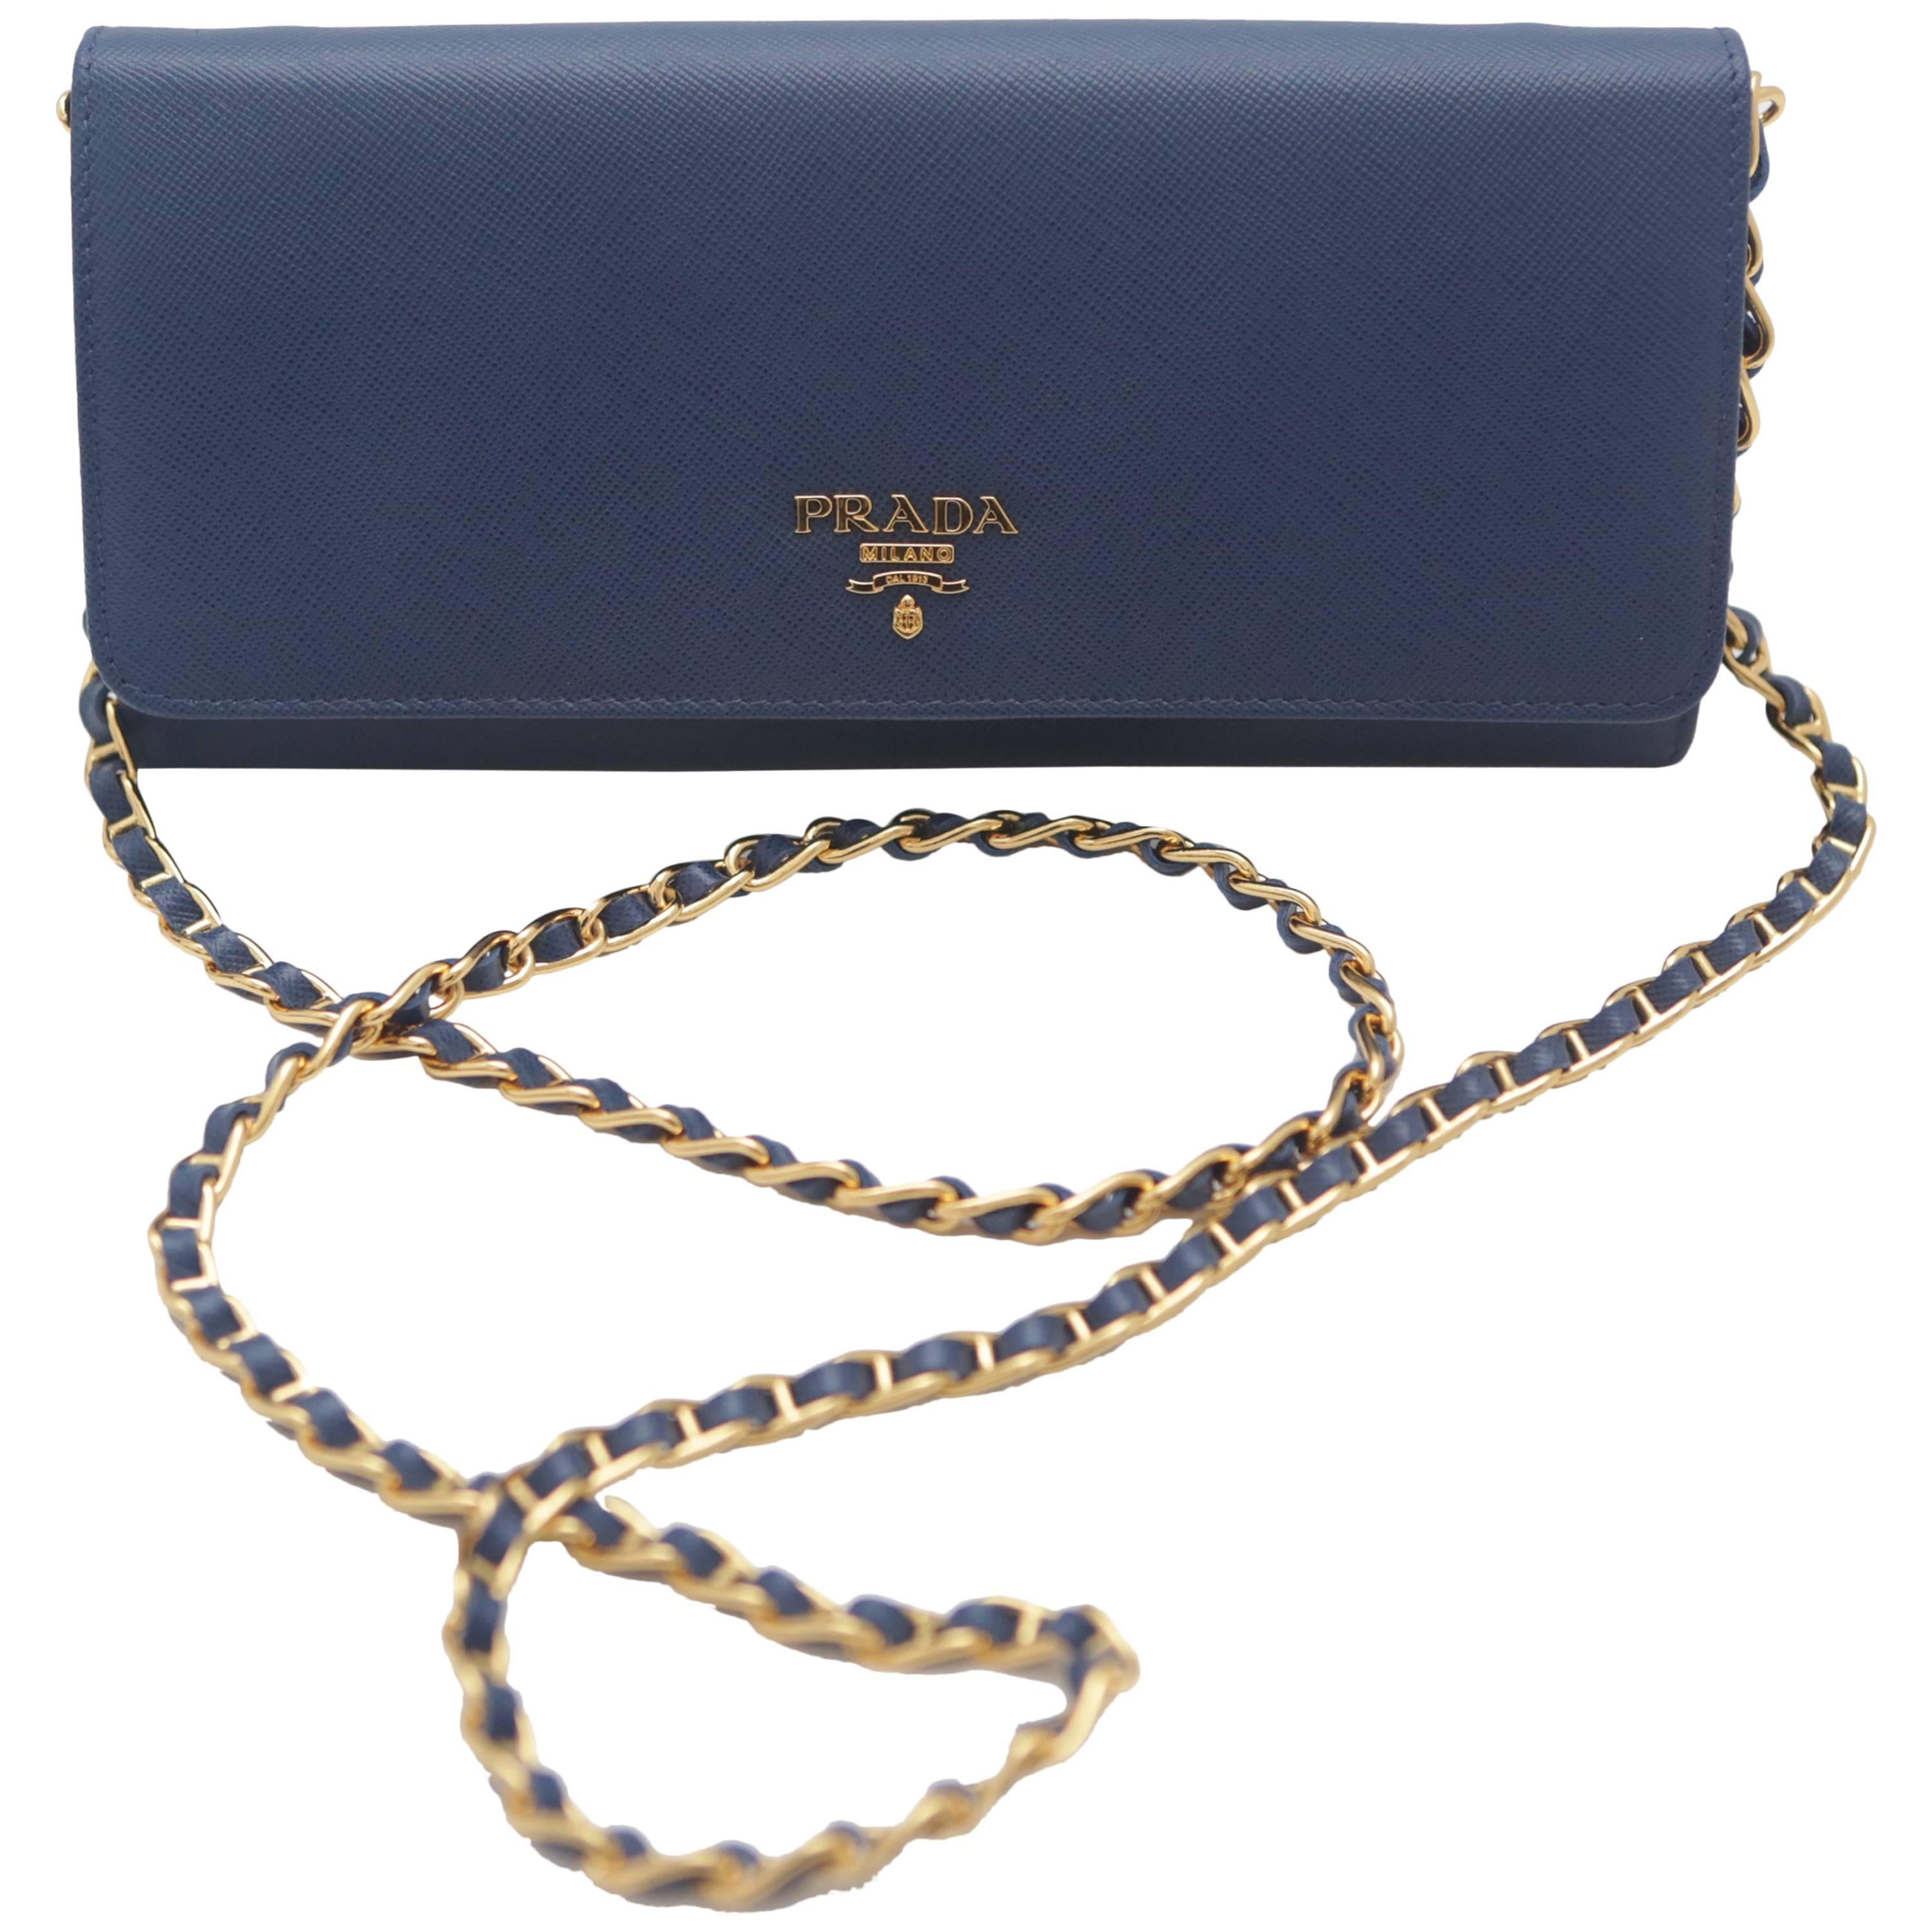 Prada Saffiano Oro Wallet Handbag on a Chain